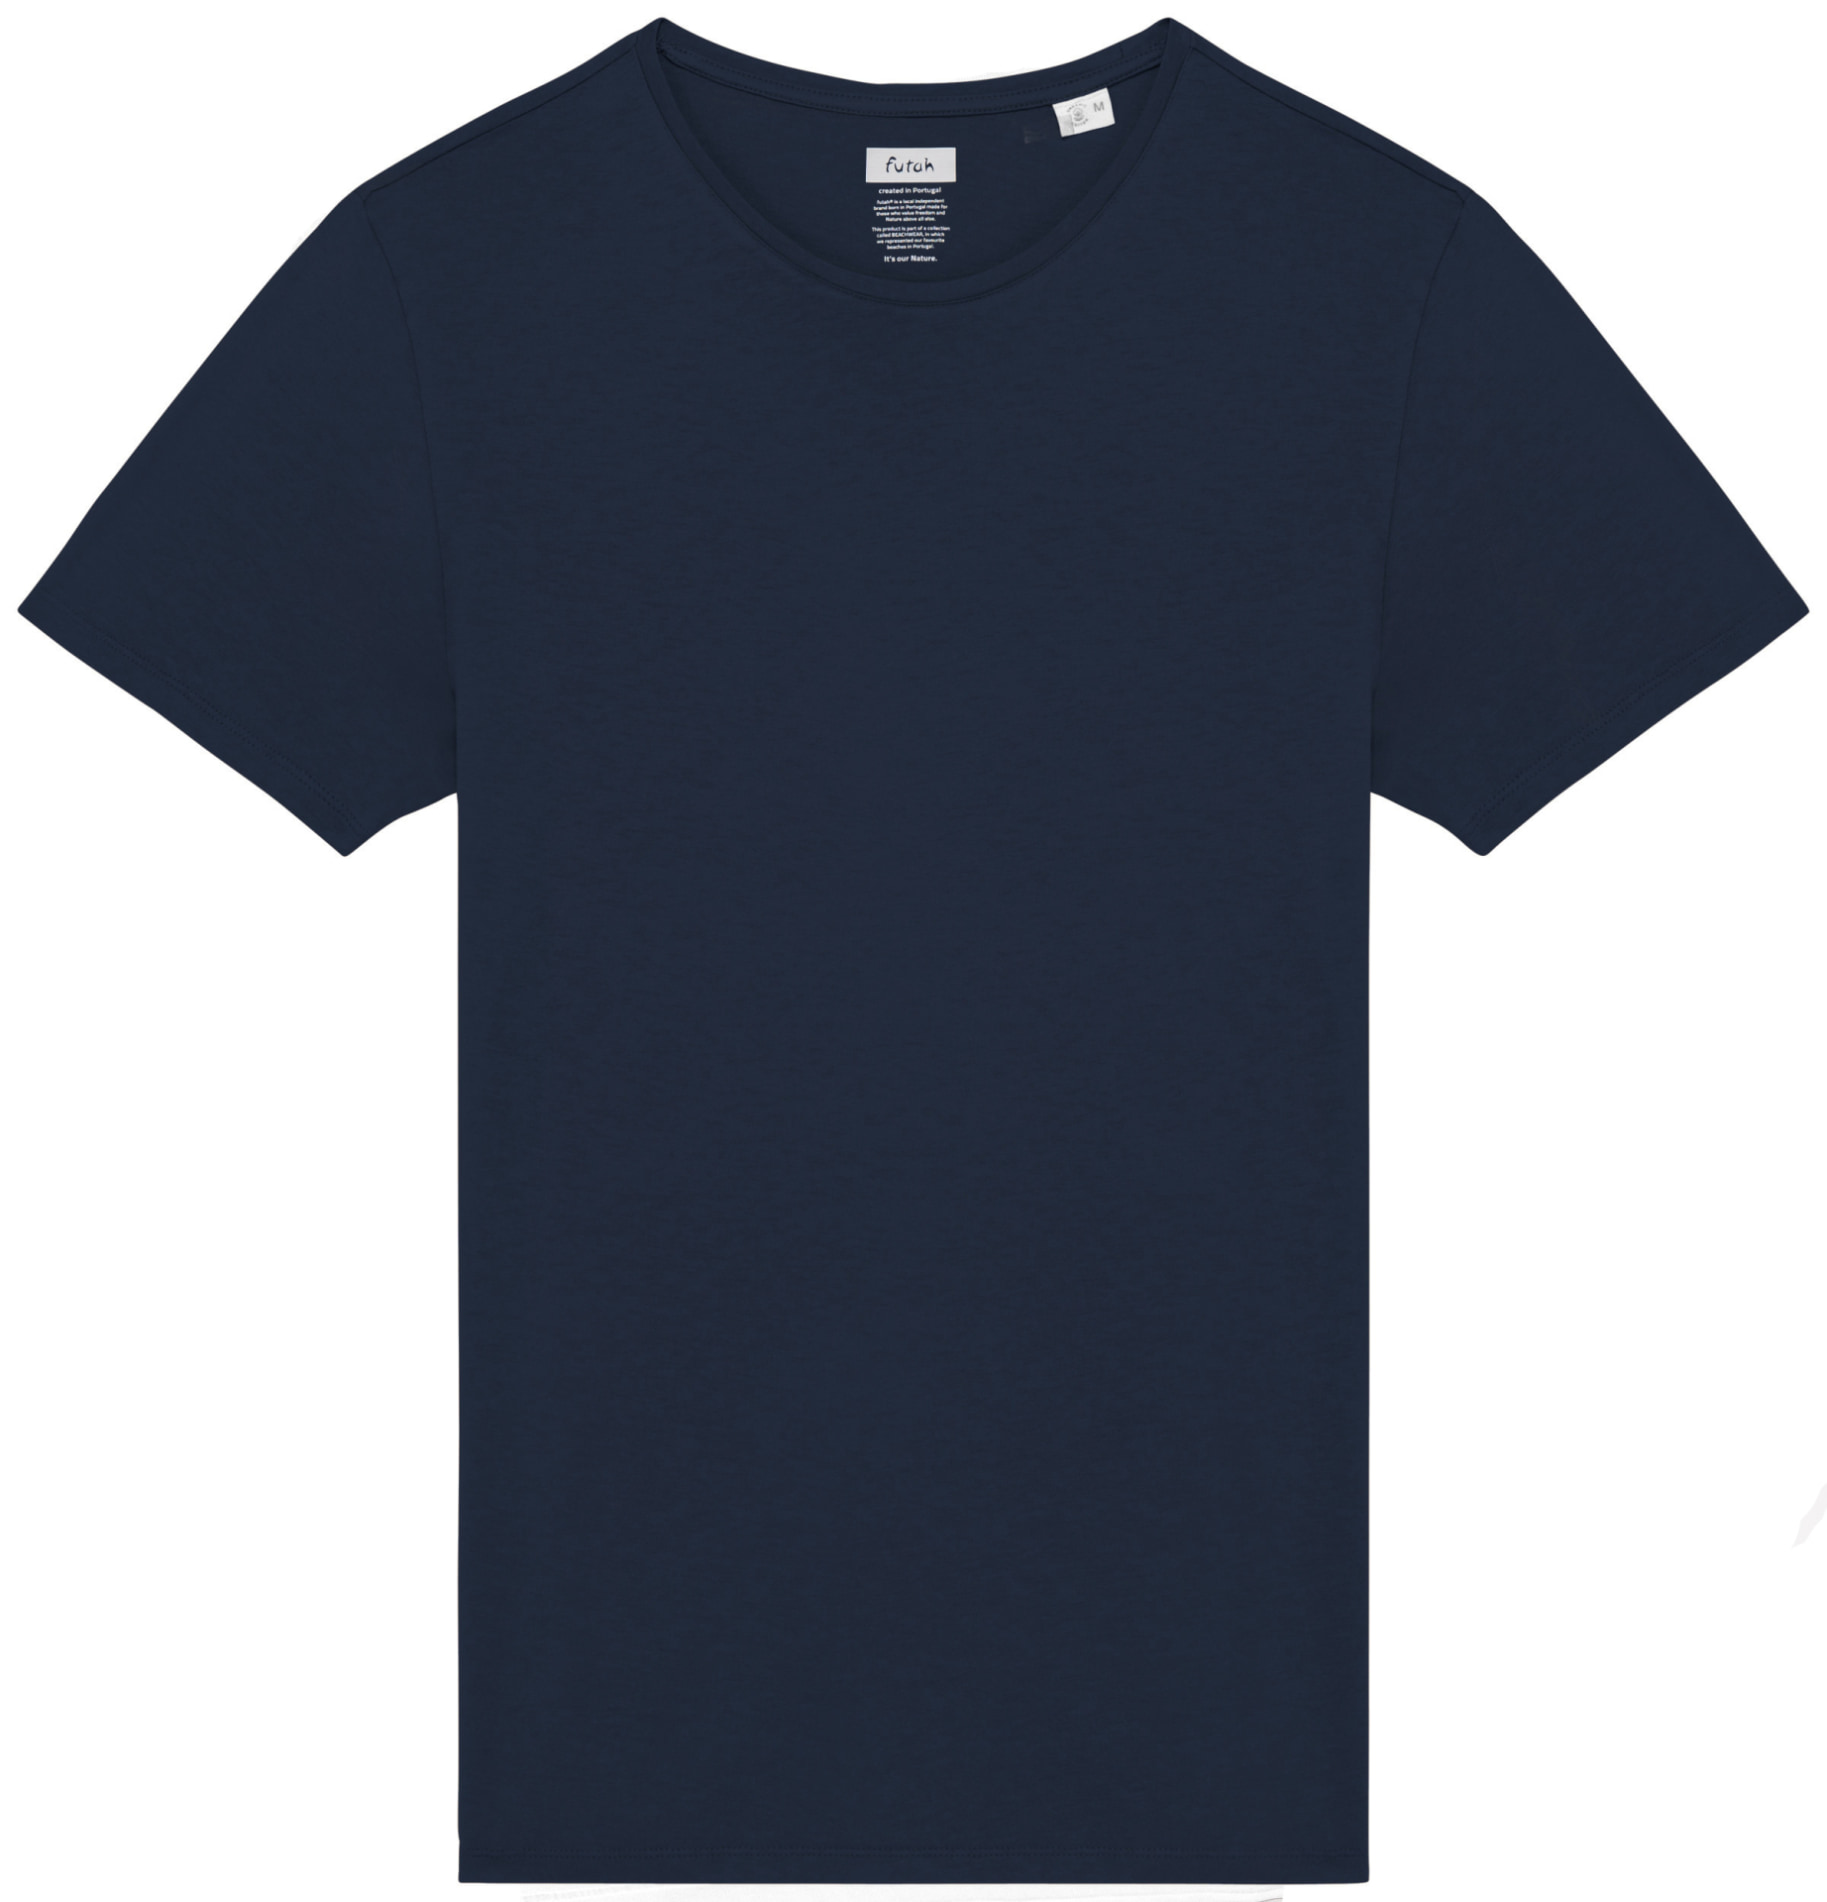 Futah - Organic Cotton T-Shirt - Ericeira (1)